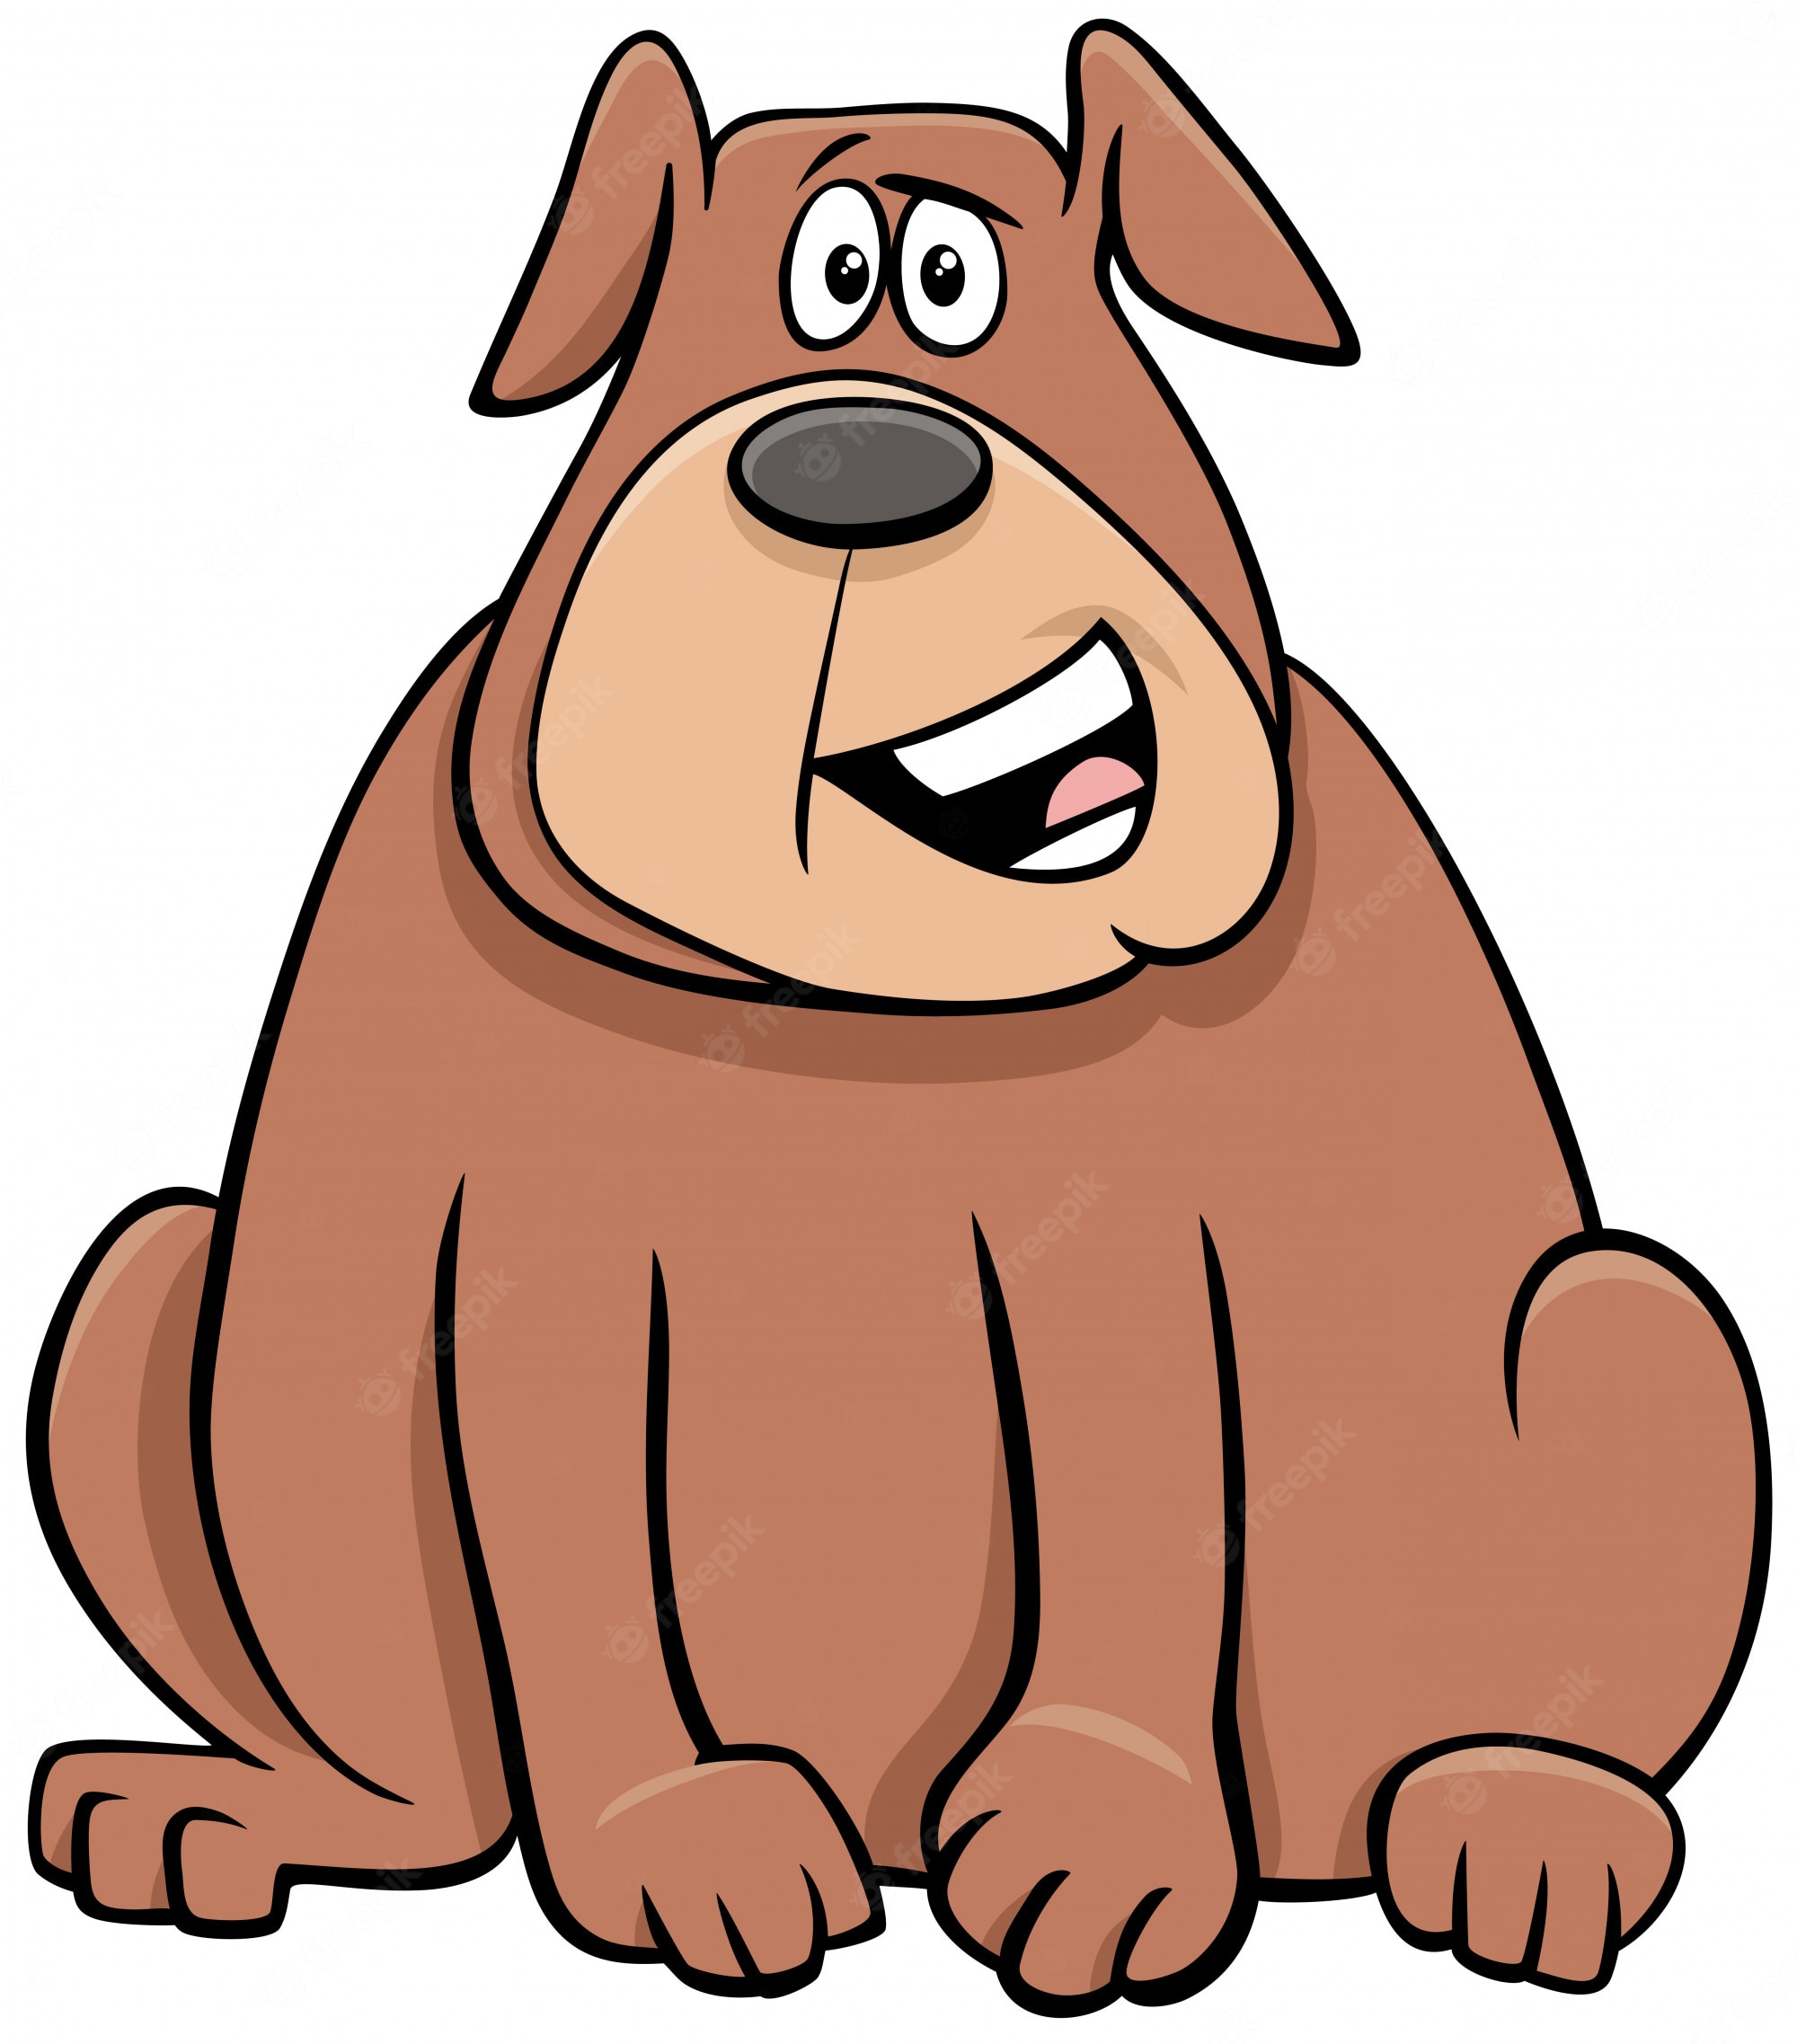 funny-bad-dog-cartoon-royalty-free-vector-image-clip-art-library